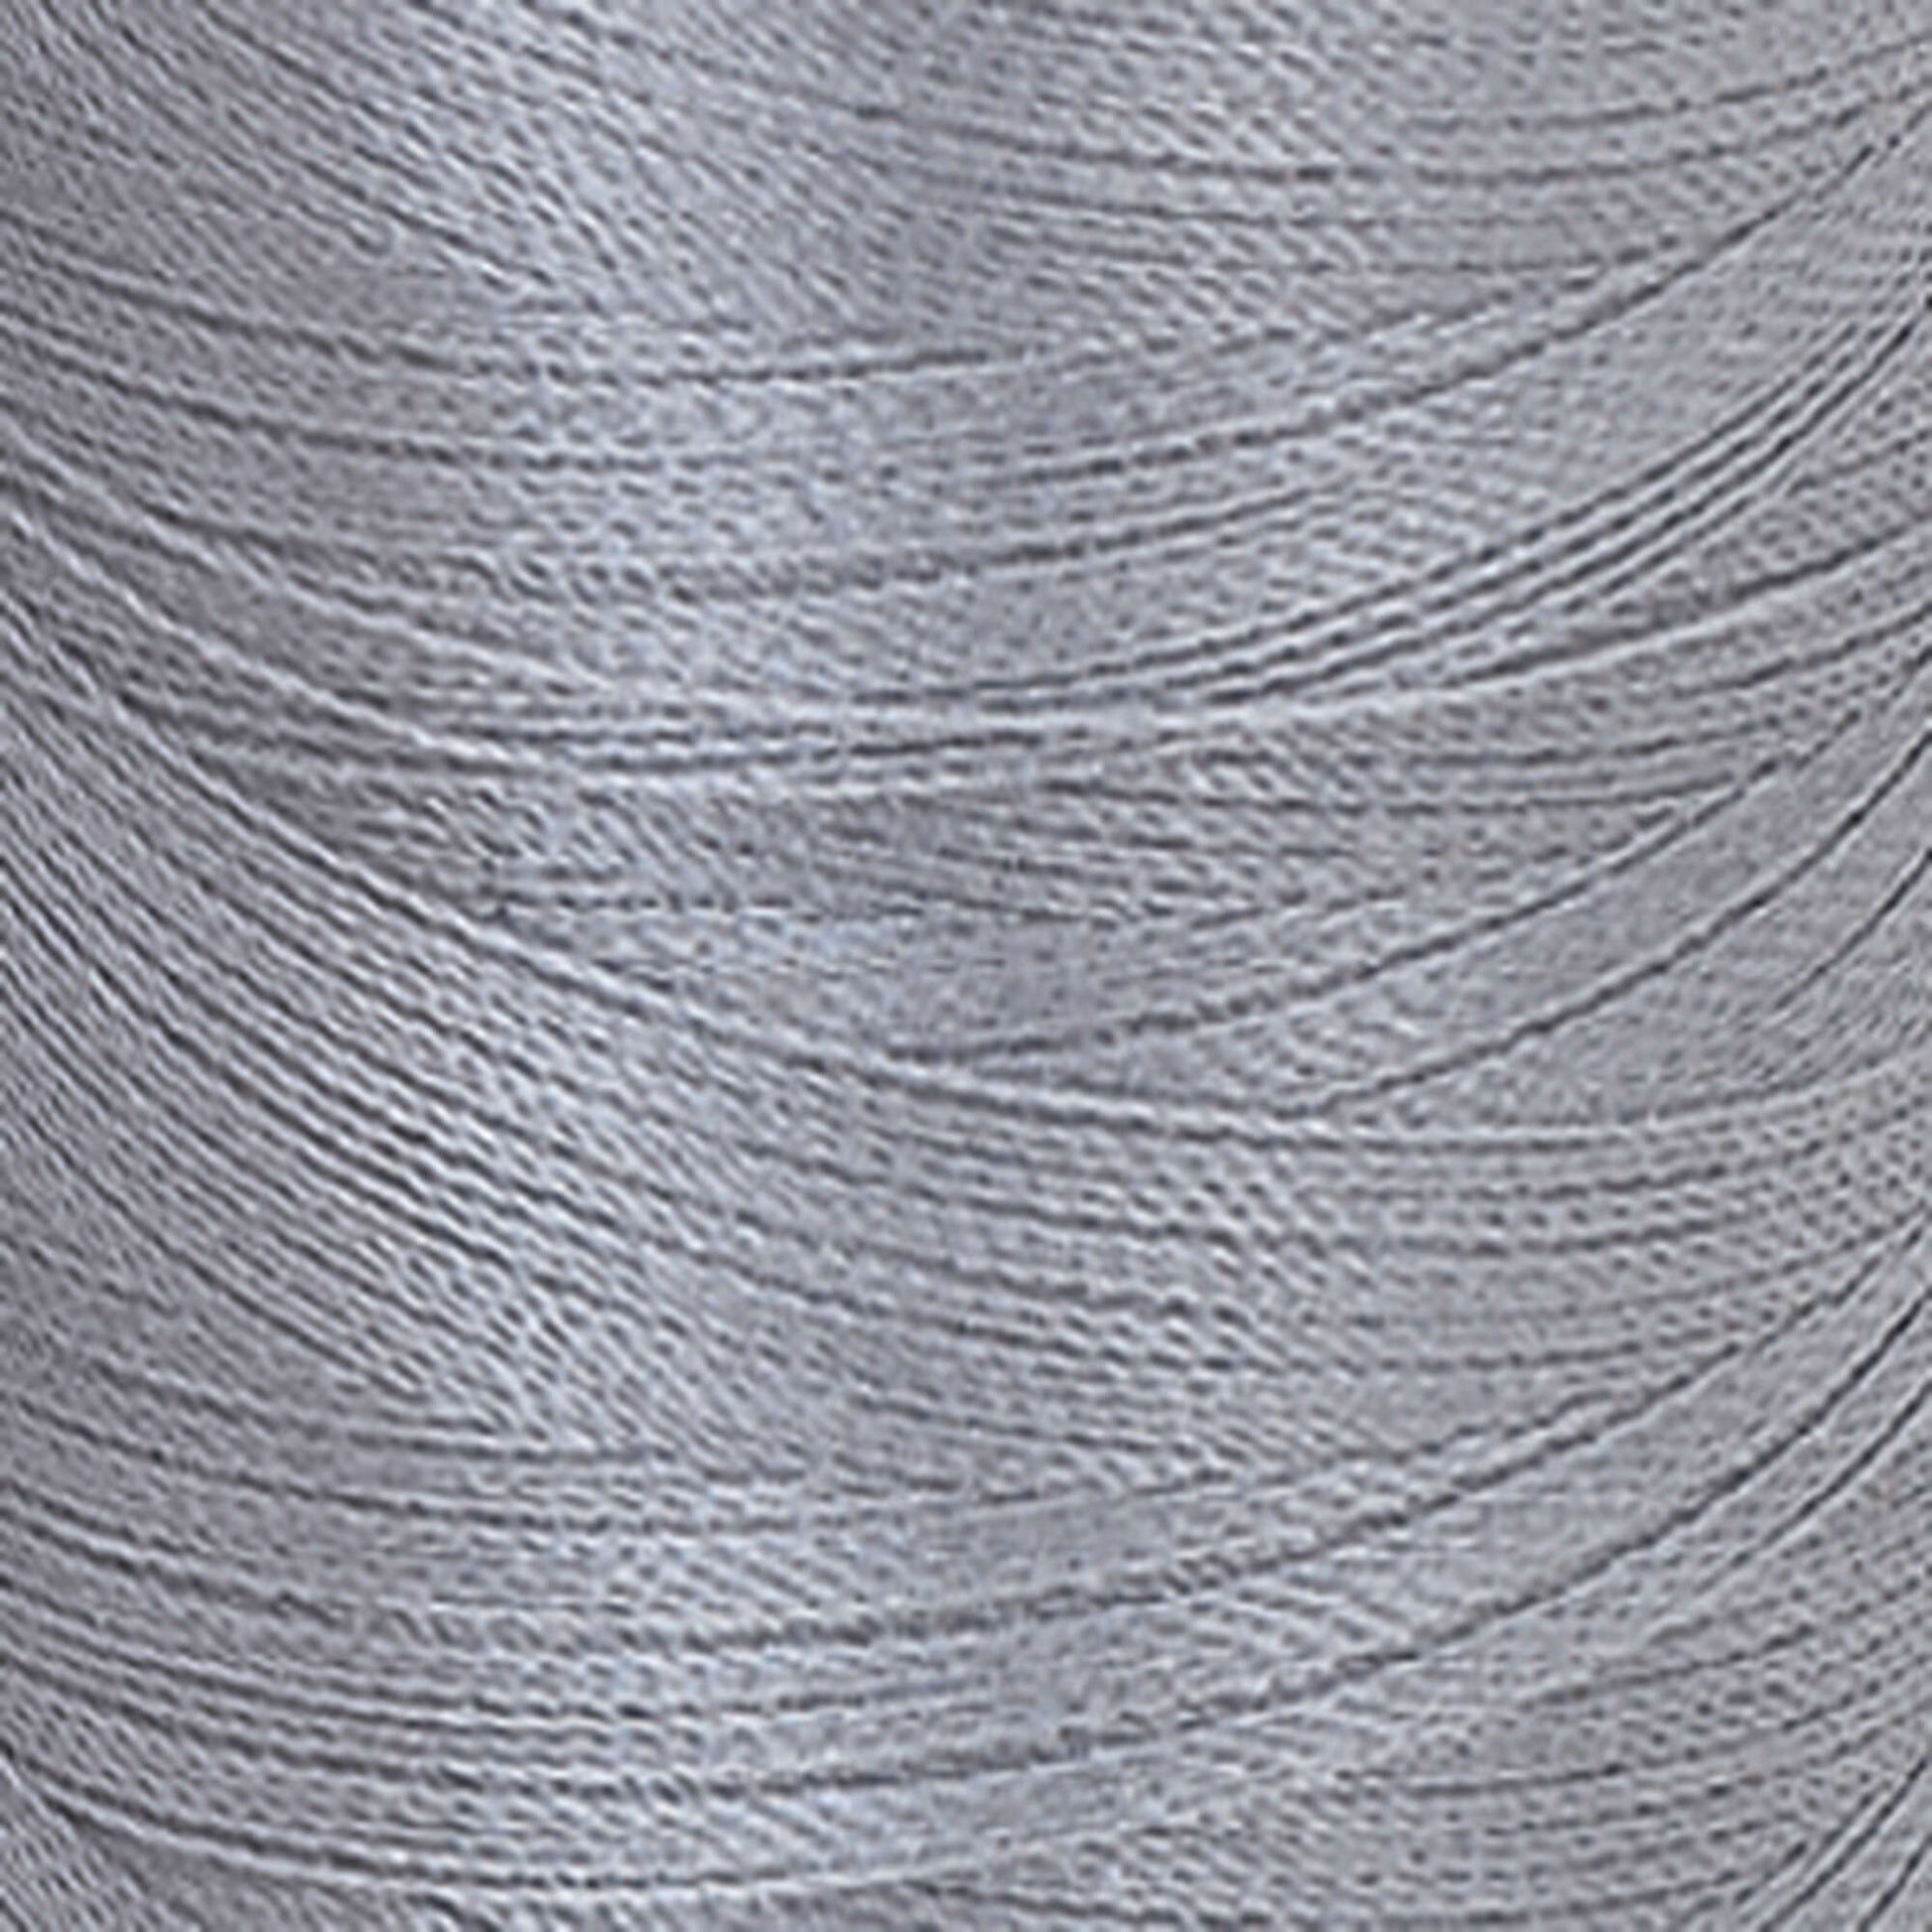 Coats & Clark Machine Embroidery Thread (1100 Yards) Slate